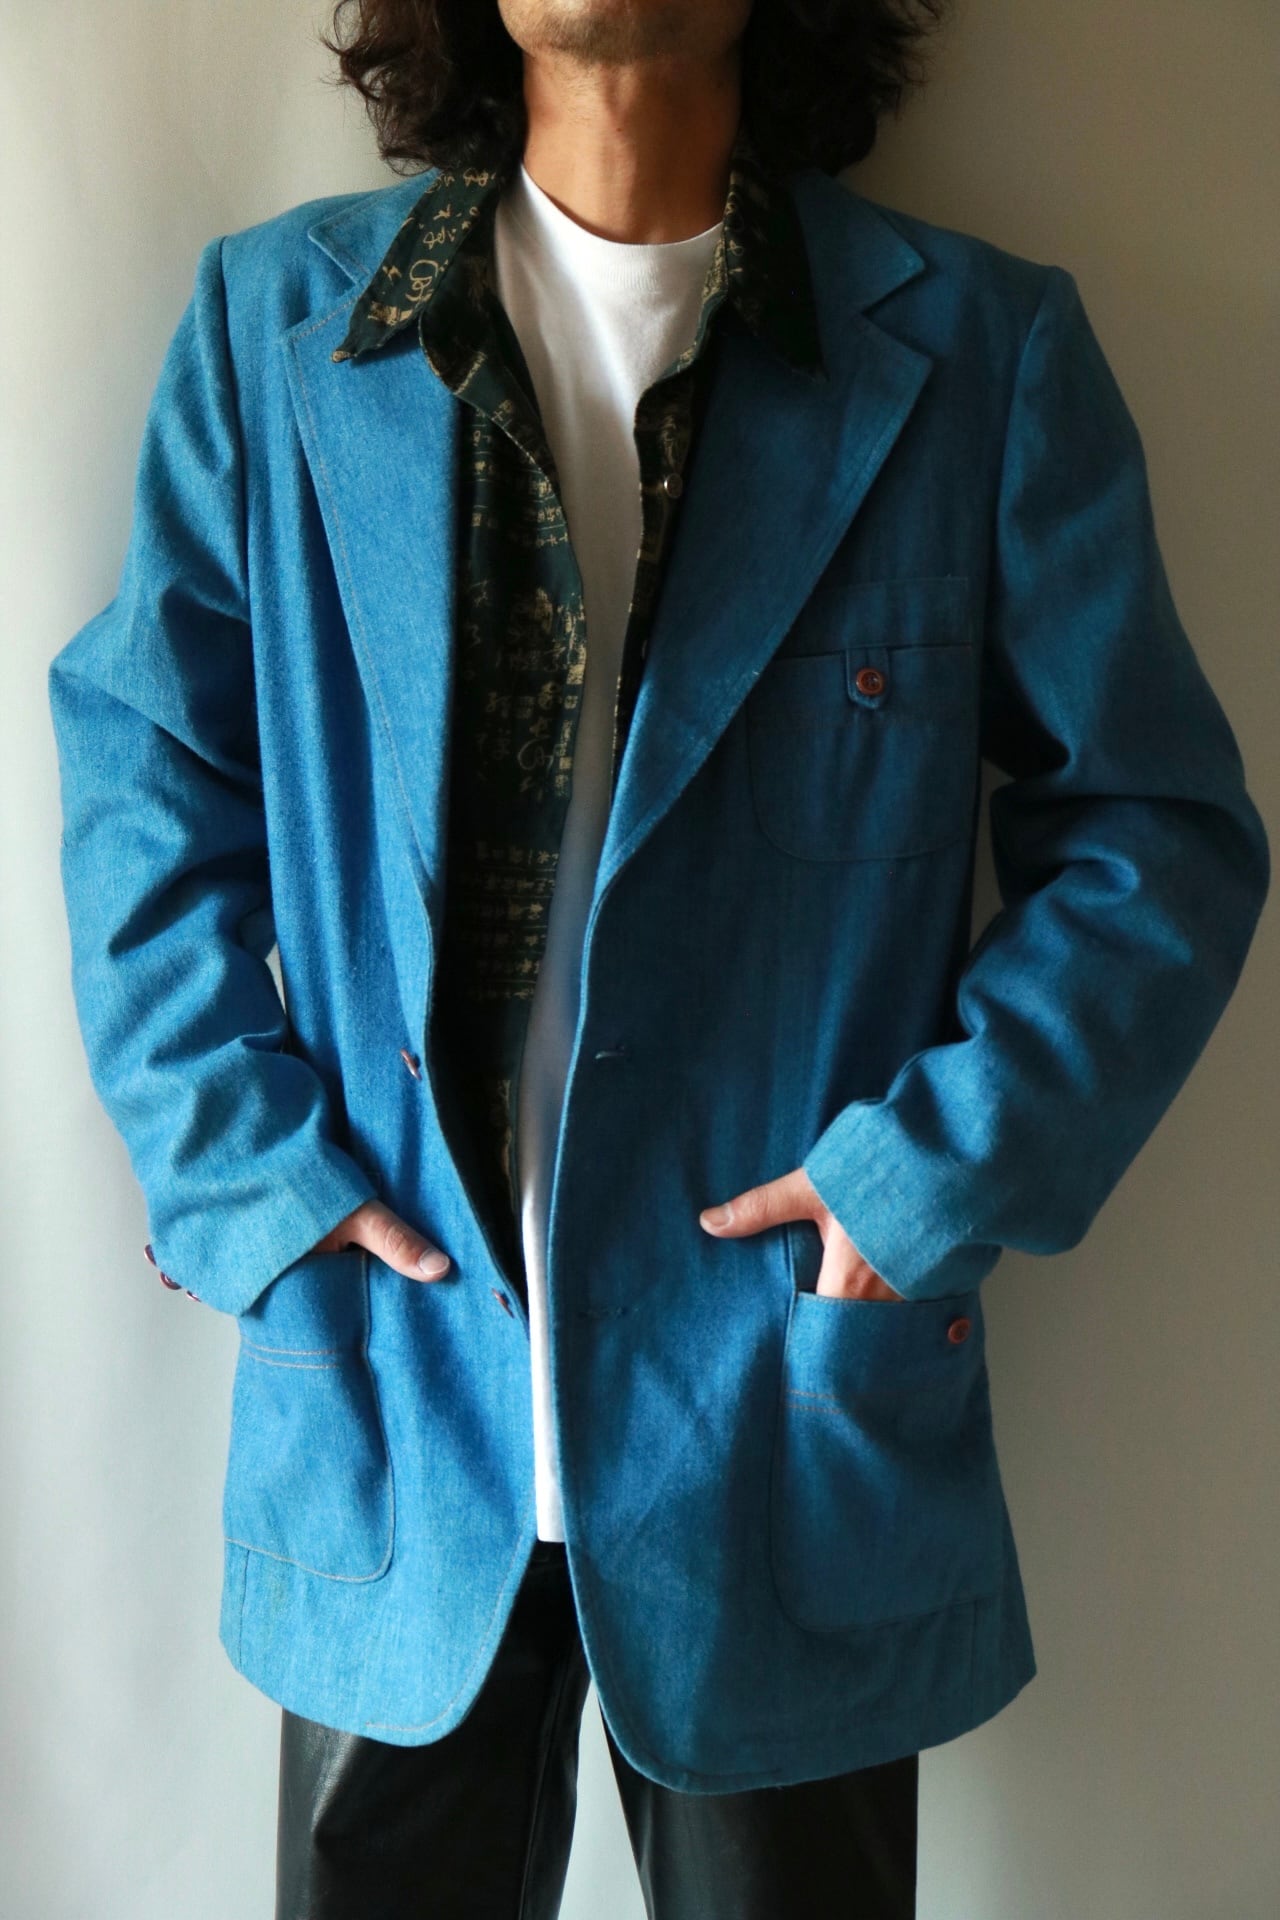 Vintage 70s blue tailored jacket